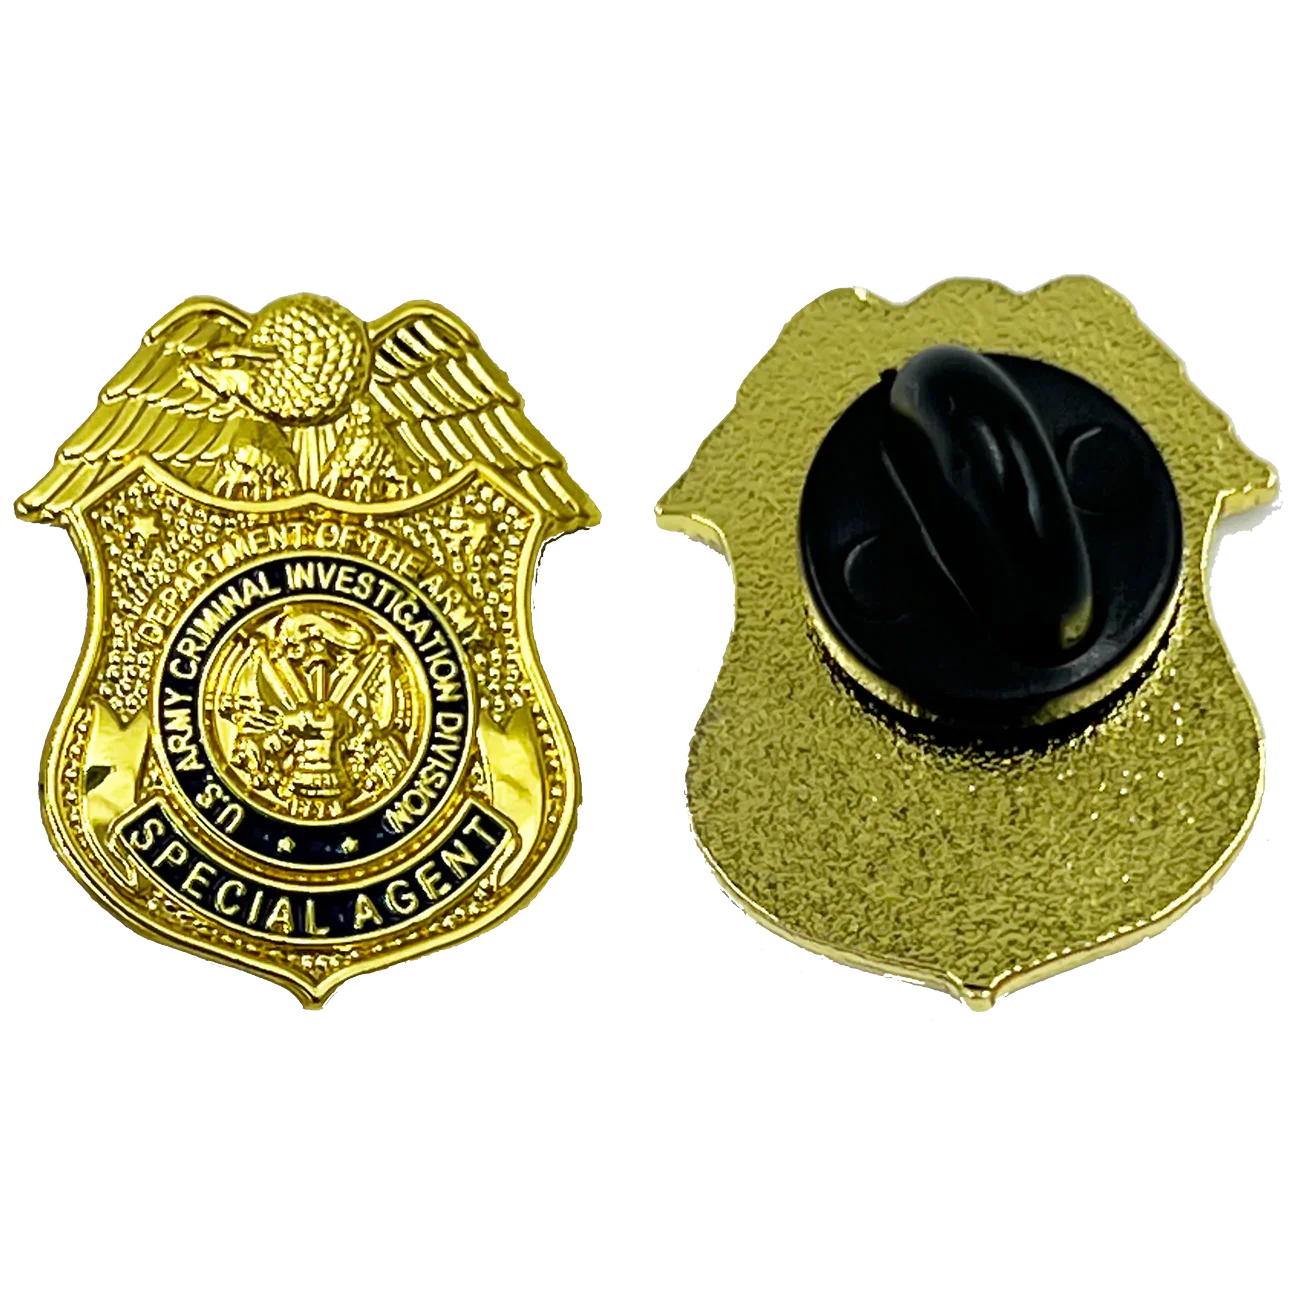 PBX-002-B Army Criminal Investigation Division CID Investigator Special Agent Lapel Pin